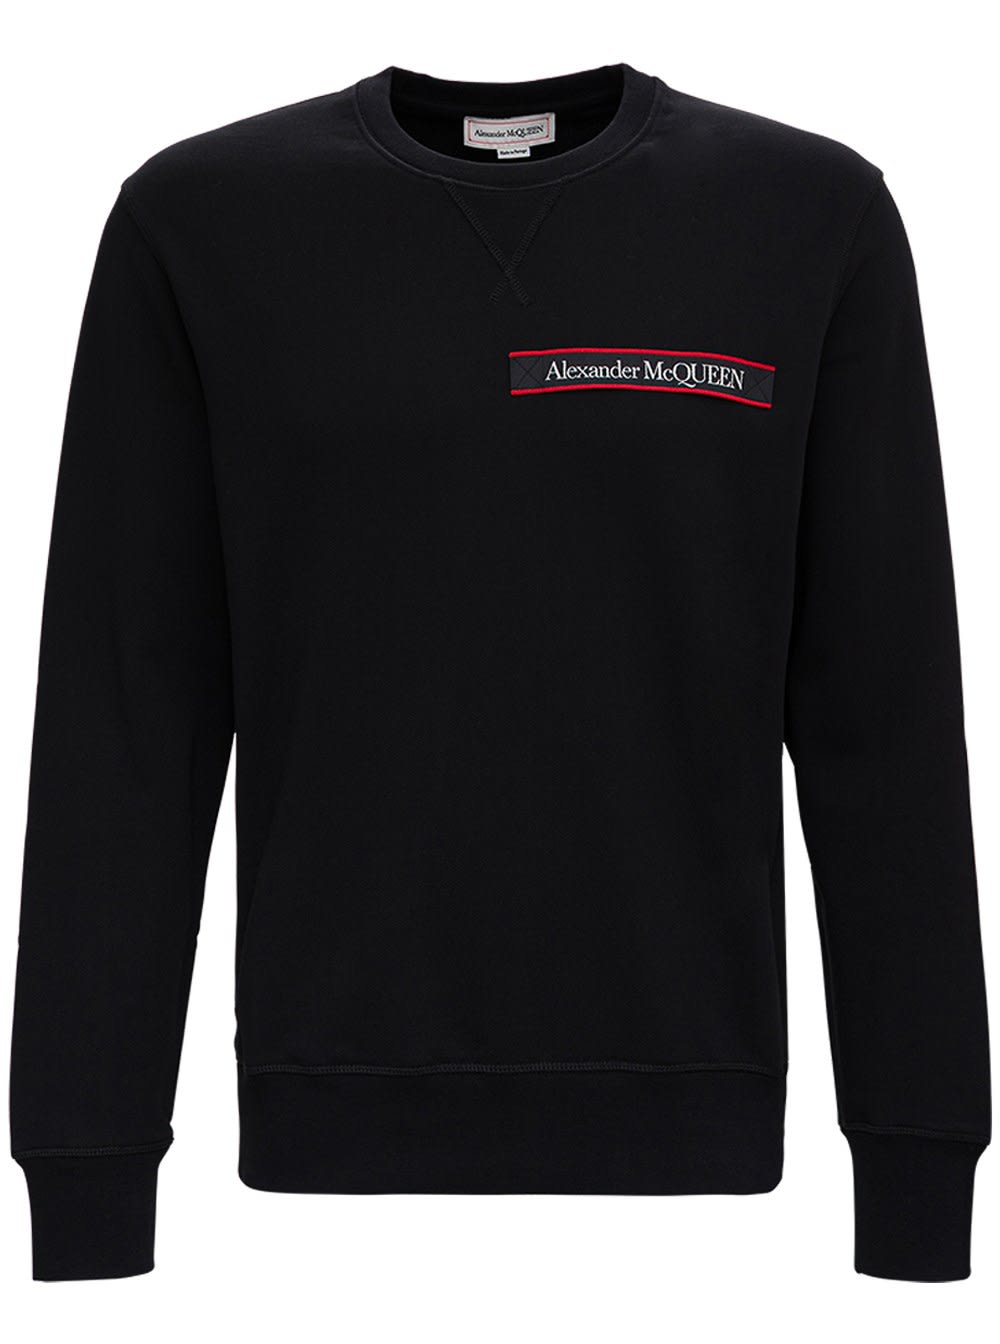 Alexander McQueen Black Cotton Sweatshirt With Logo